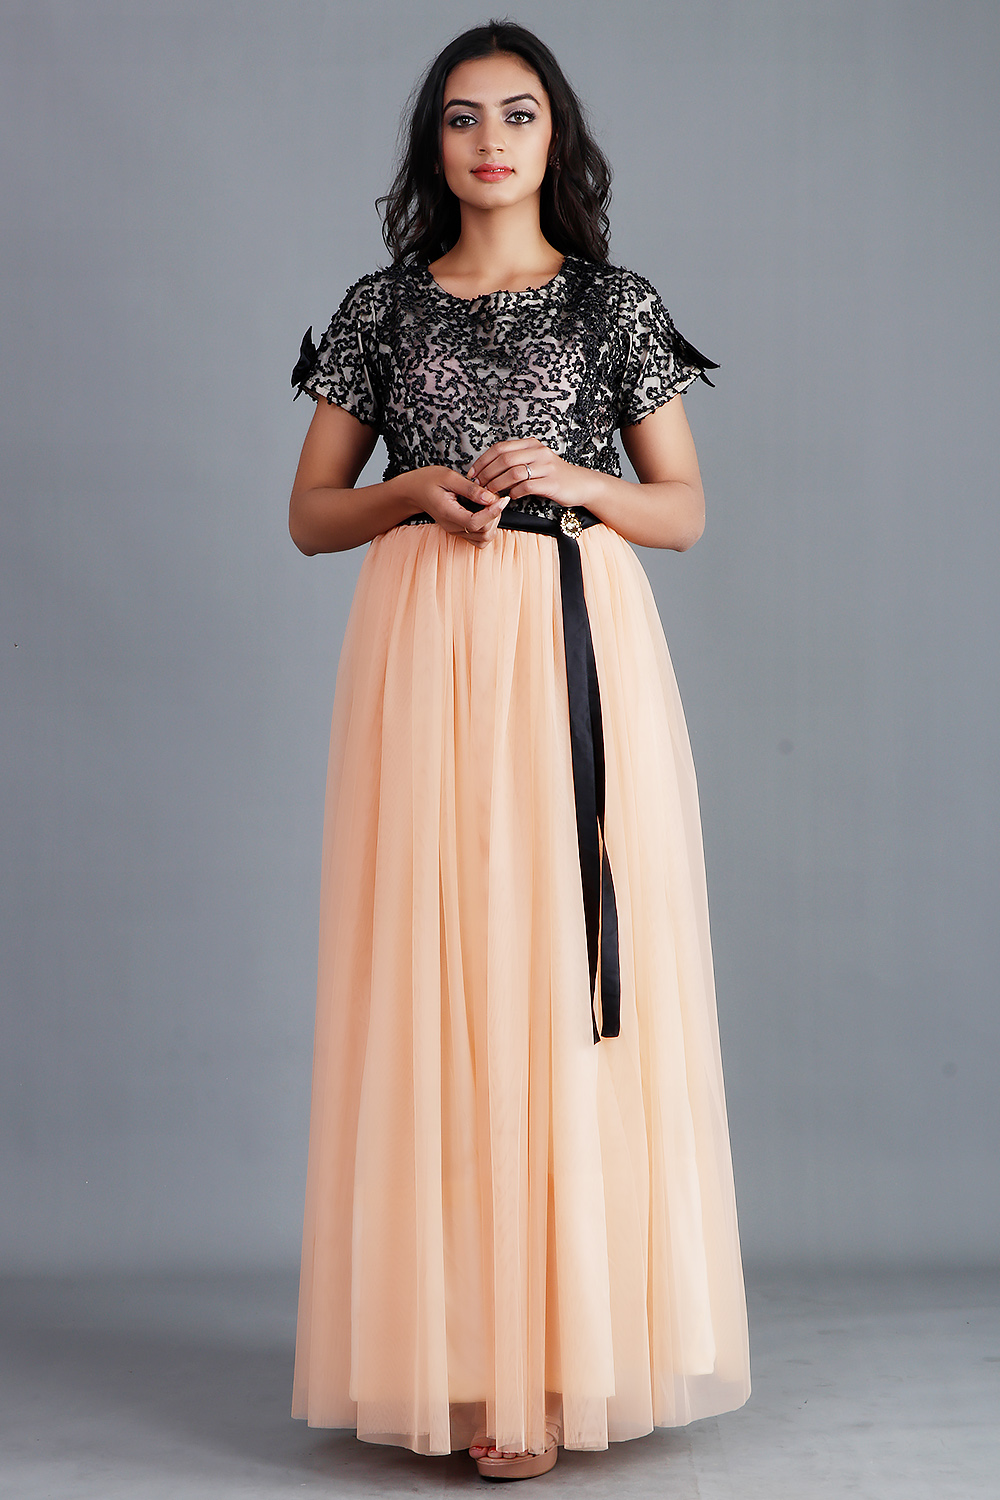 Buy online Black Indian Designer Gown - AD Singh